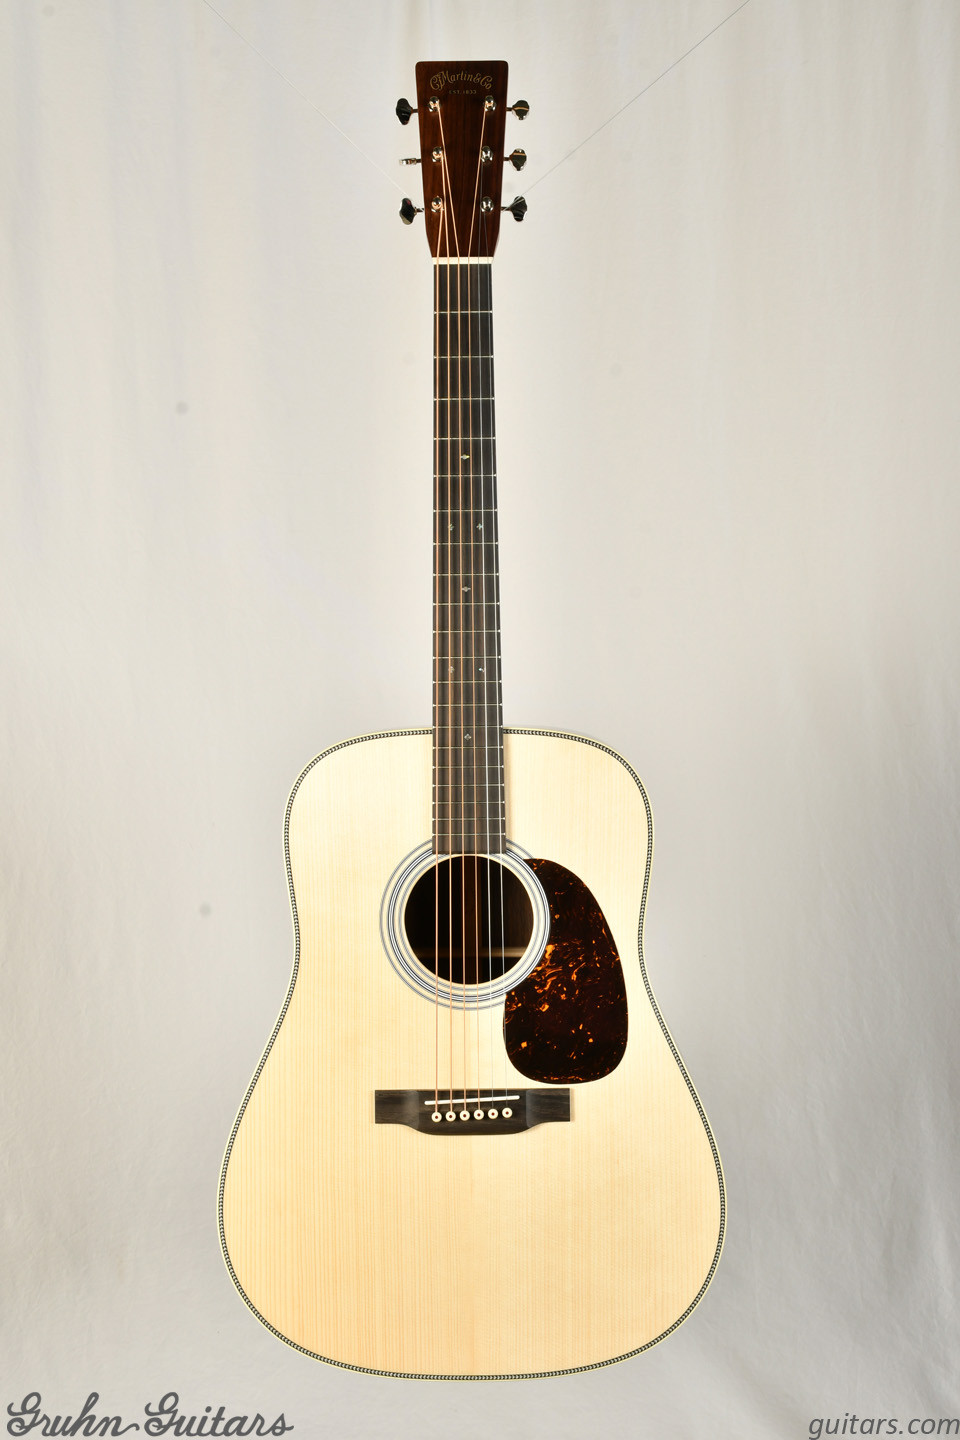 Vintage Martin Guitars For Sale - Martin Flattops | Gruhn Guitars